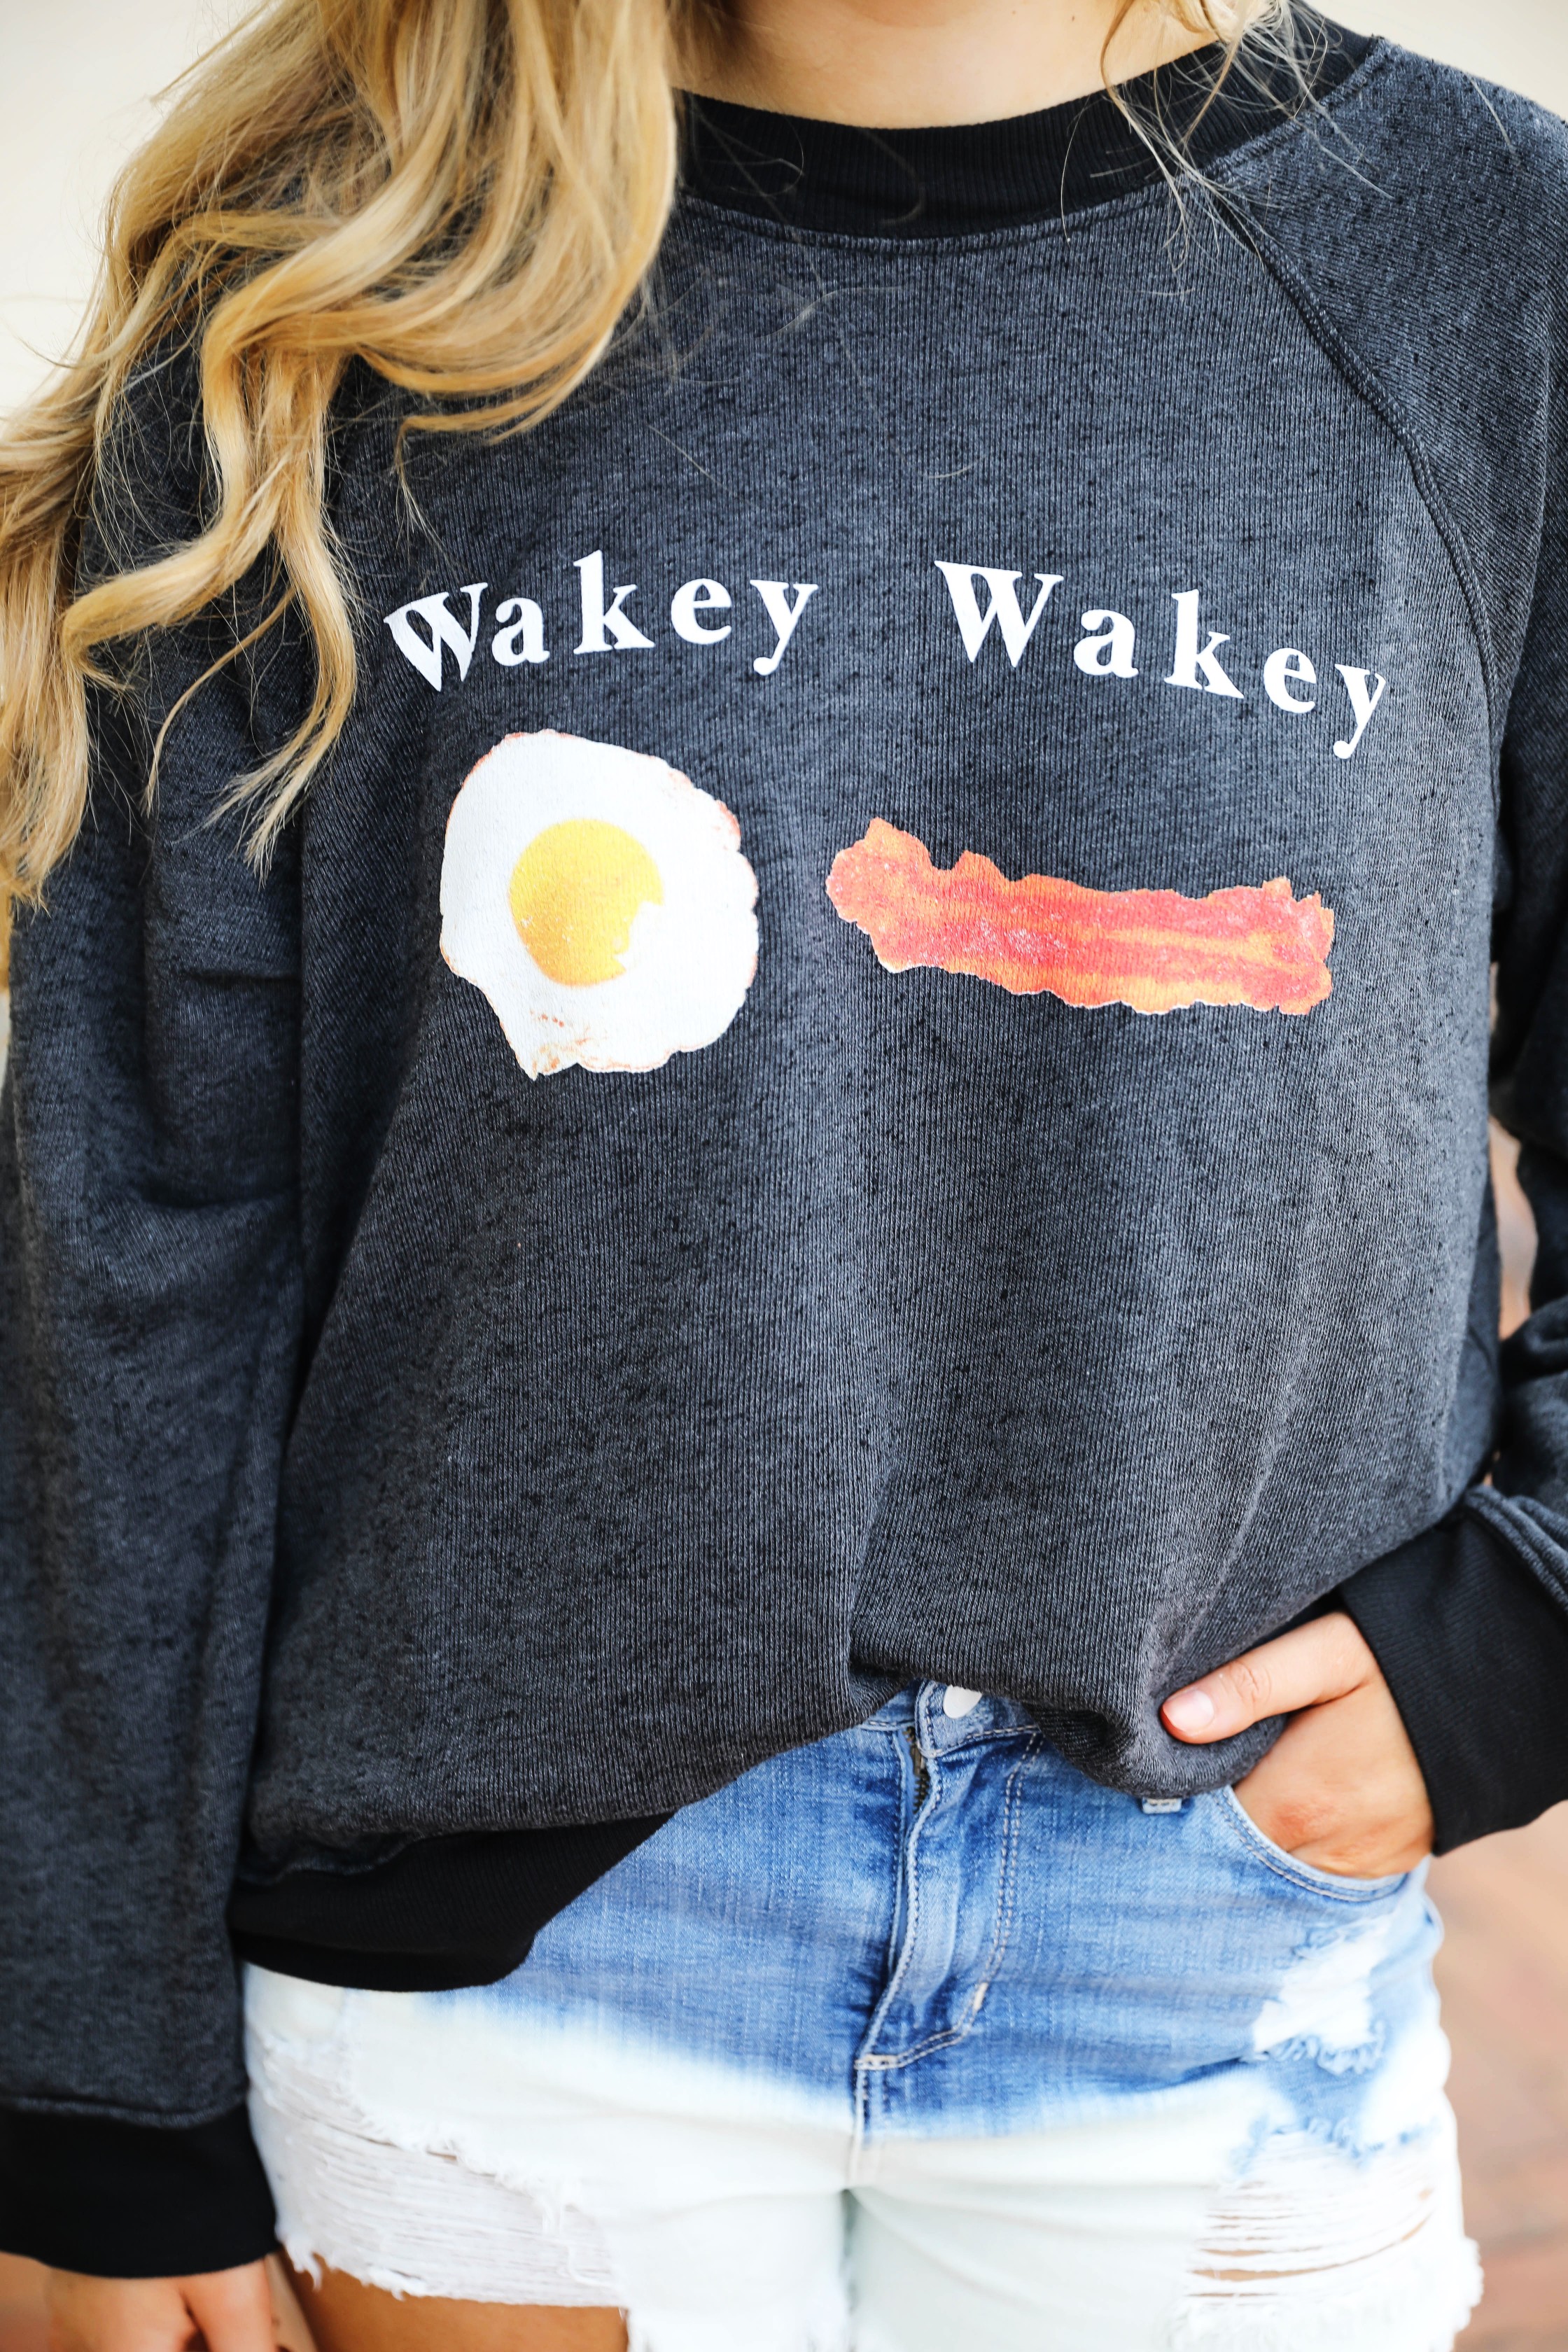 Wakey wakey eggs and bacon Wild Fox sweatshirt tee styled on Daily Dose of Charm by Lauren Lindmark dailydoseofcharm.com